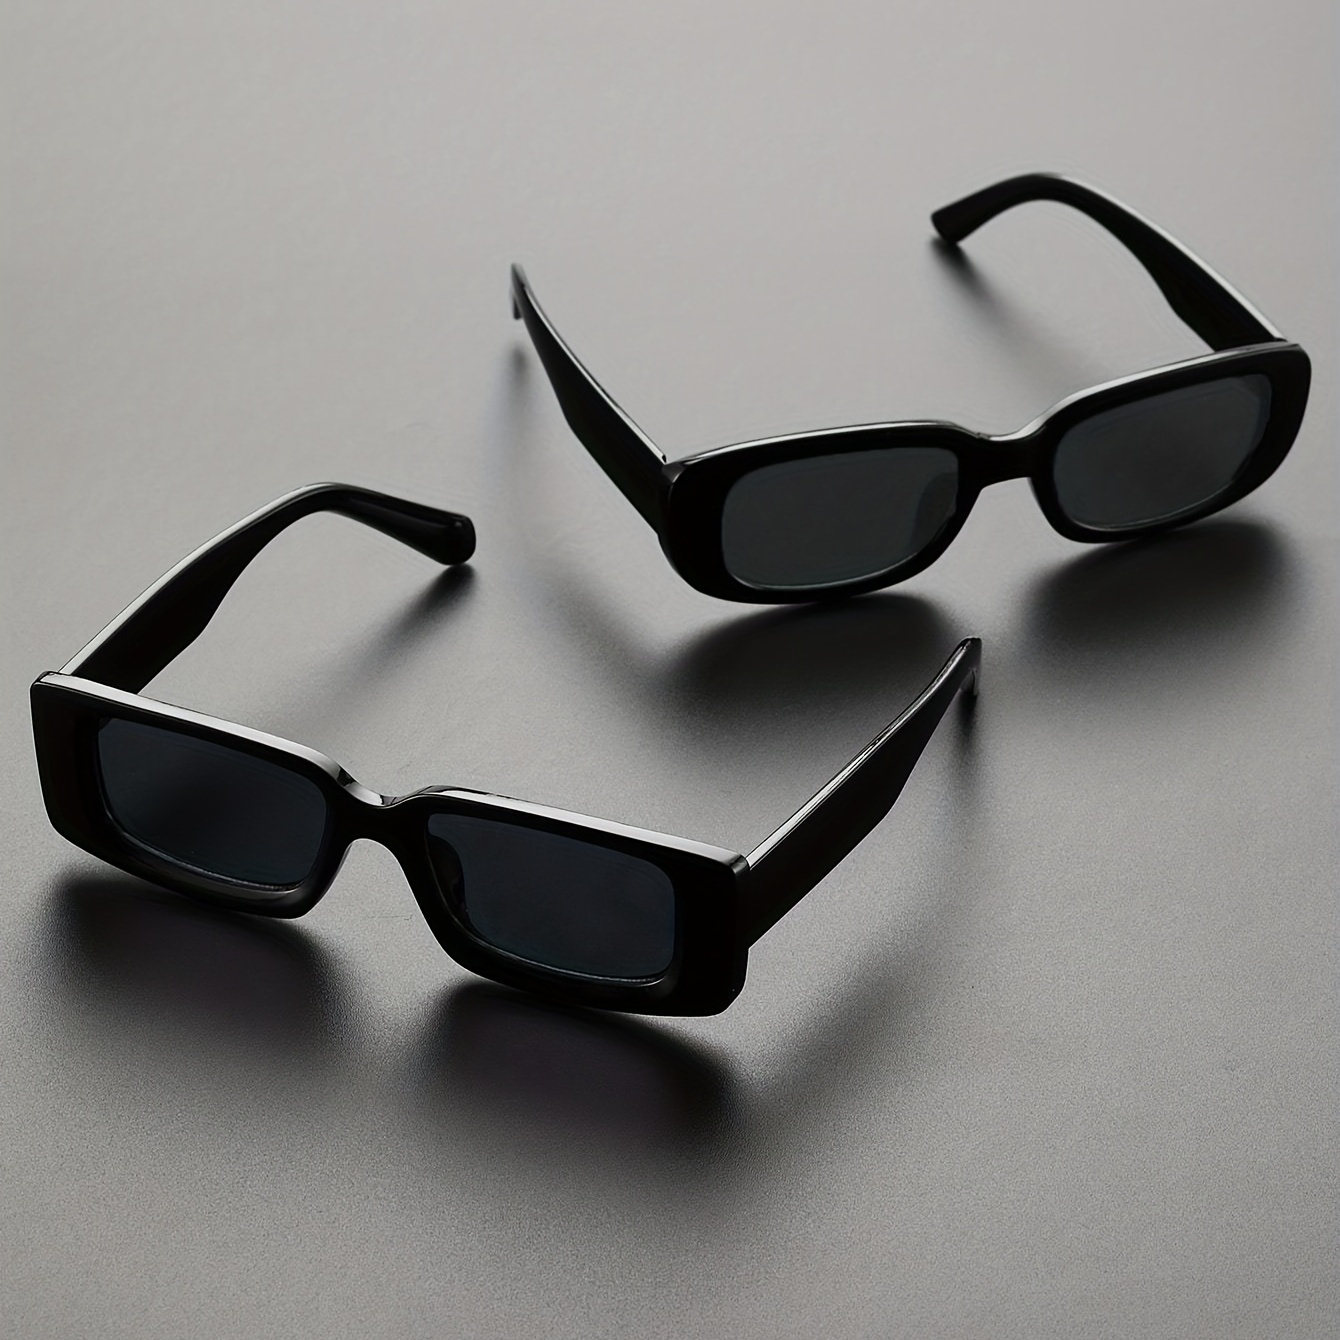 2 Pairs Men's Black Versatile Classic Sunglasses Casual PC Square Frame Sunglasses With Black Glasses Case